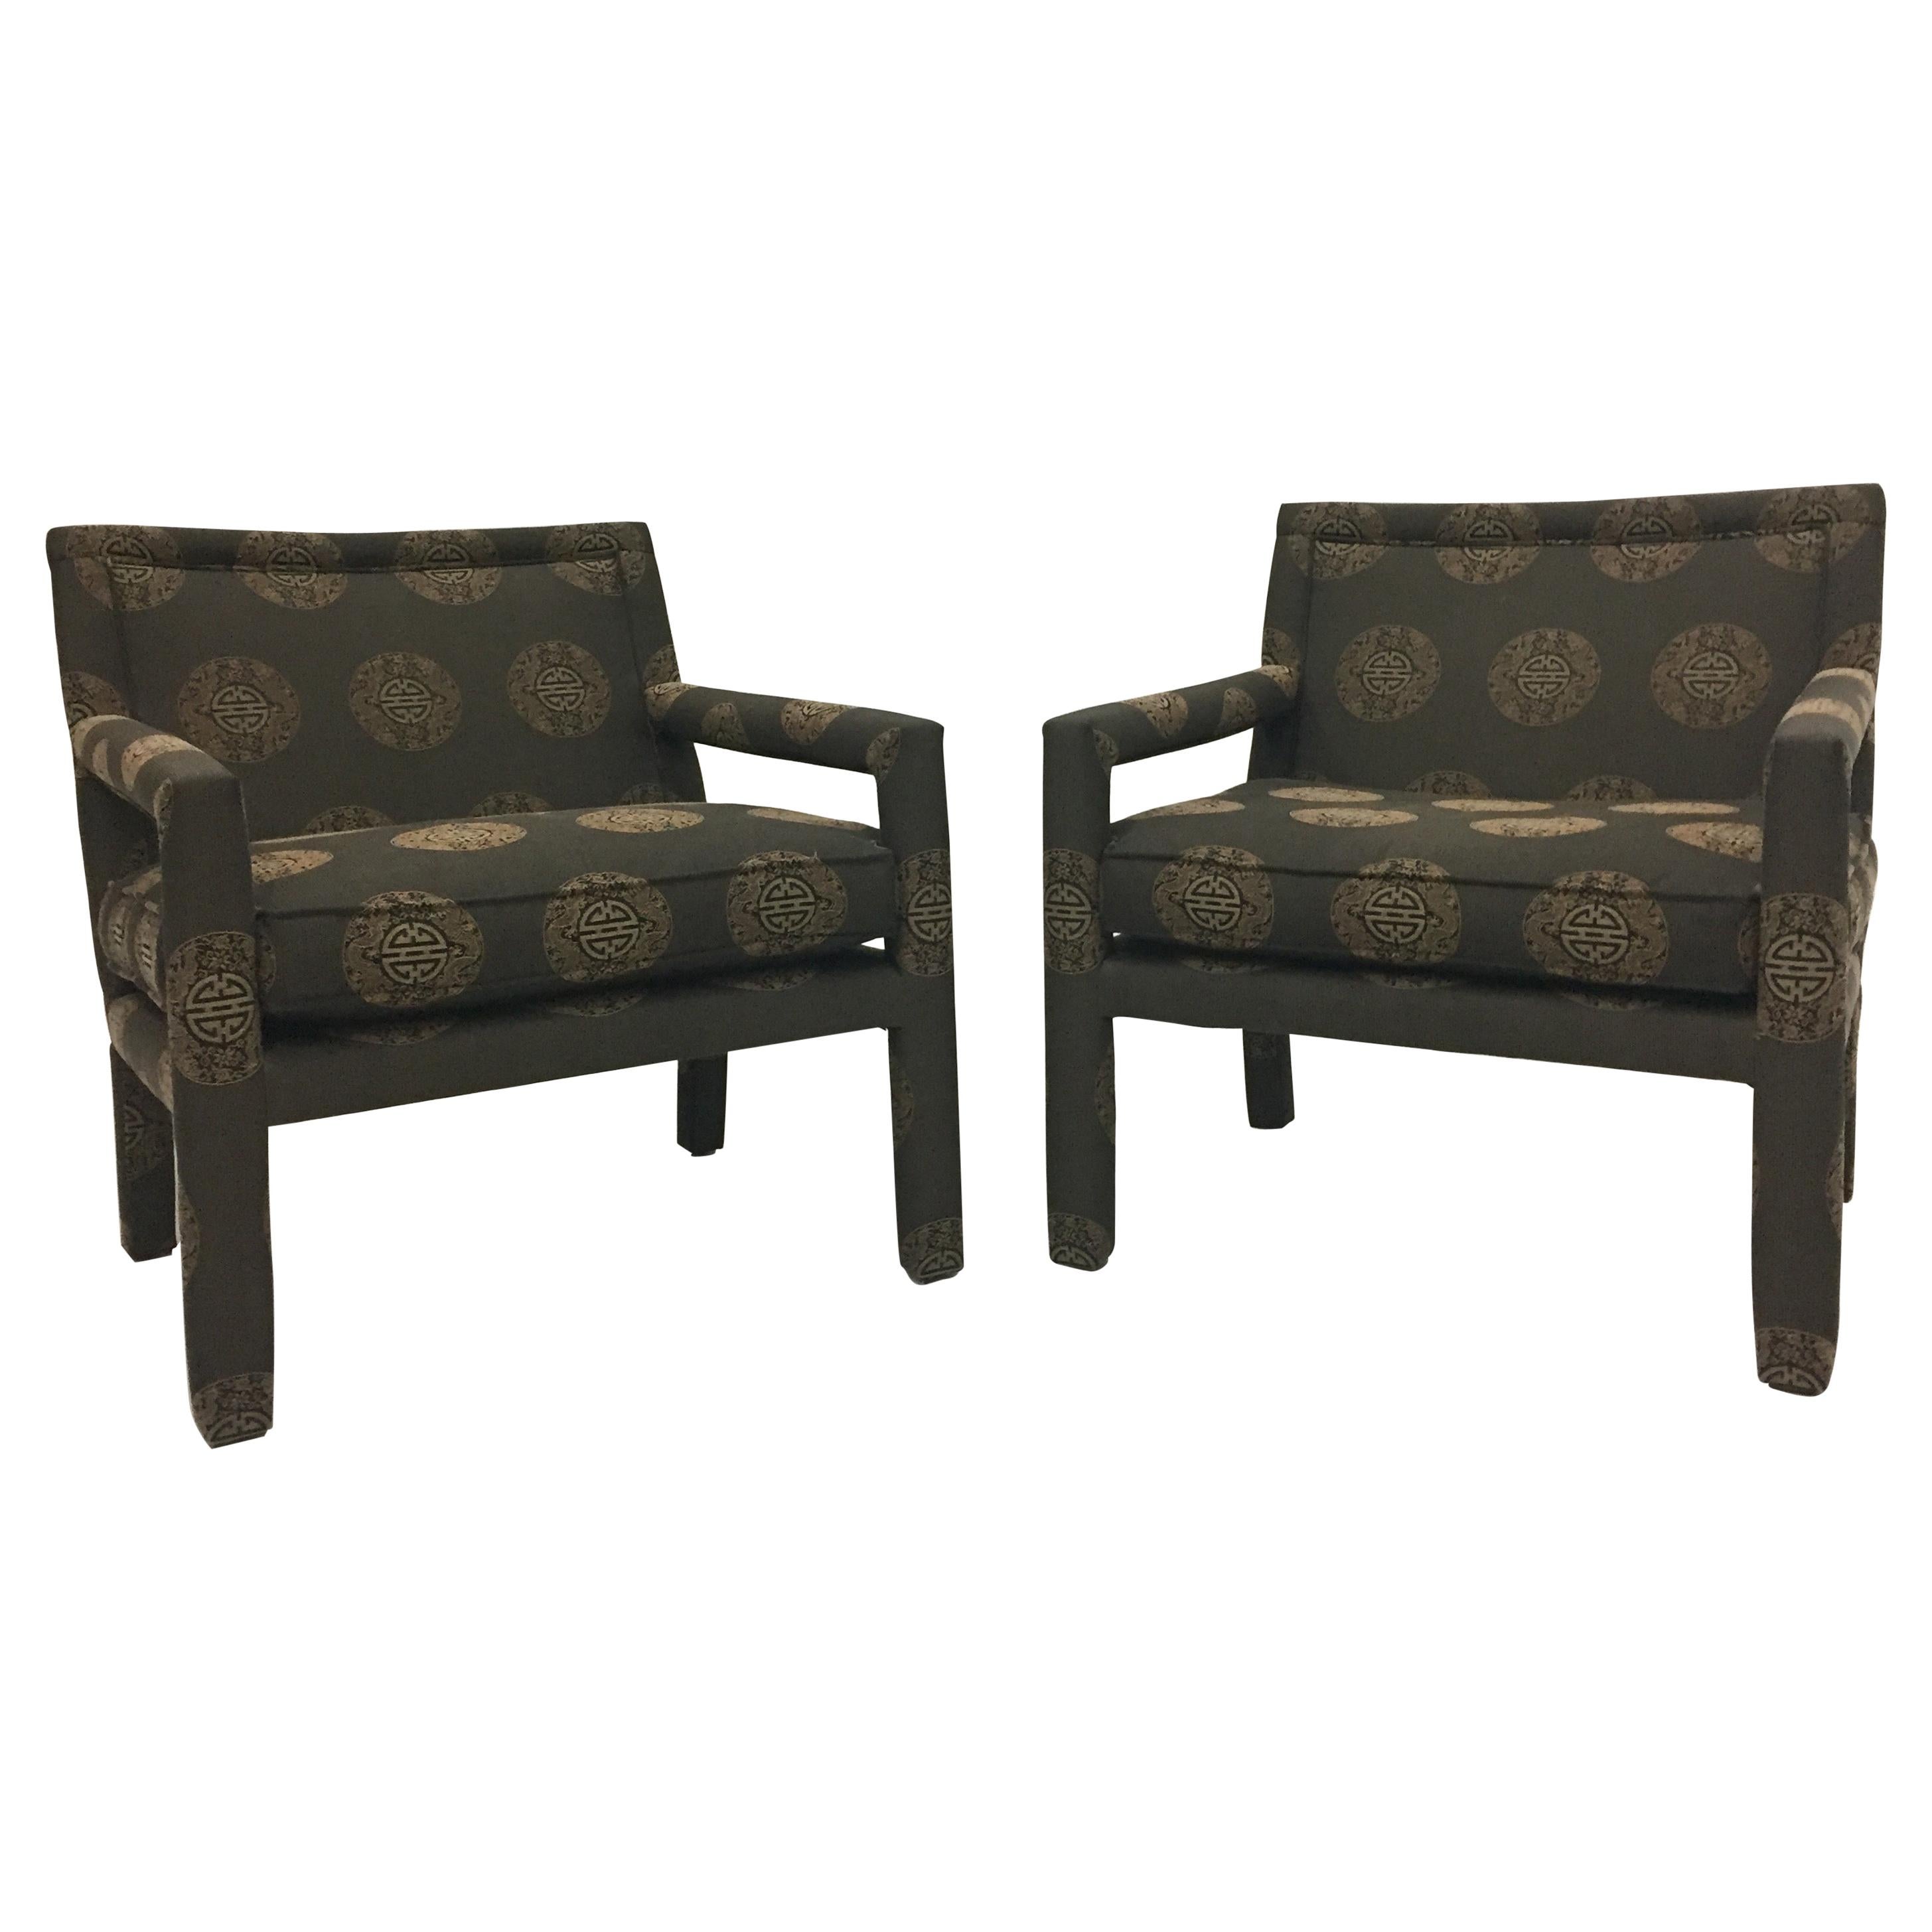 Pair of Luxurious Sleek Mid-Century Modern Upholstered Club Armchairs